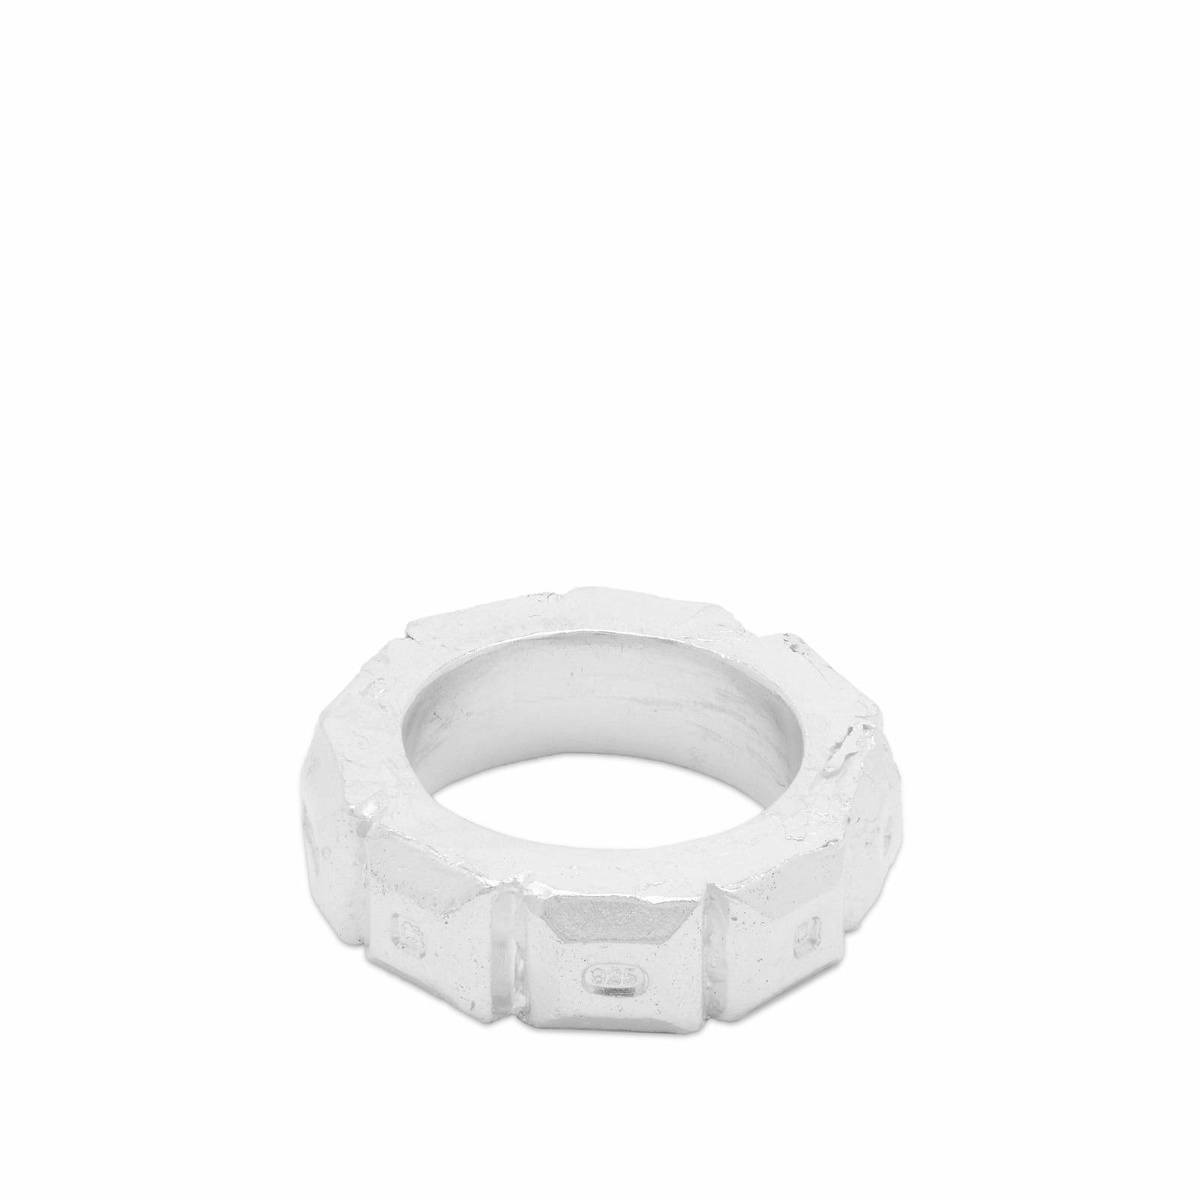 Photo: The Ouze Men's Square-Cut Hallmark Ring in Silver